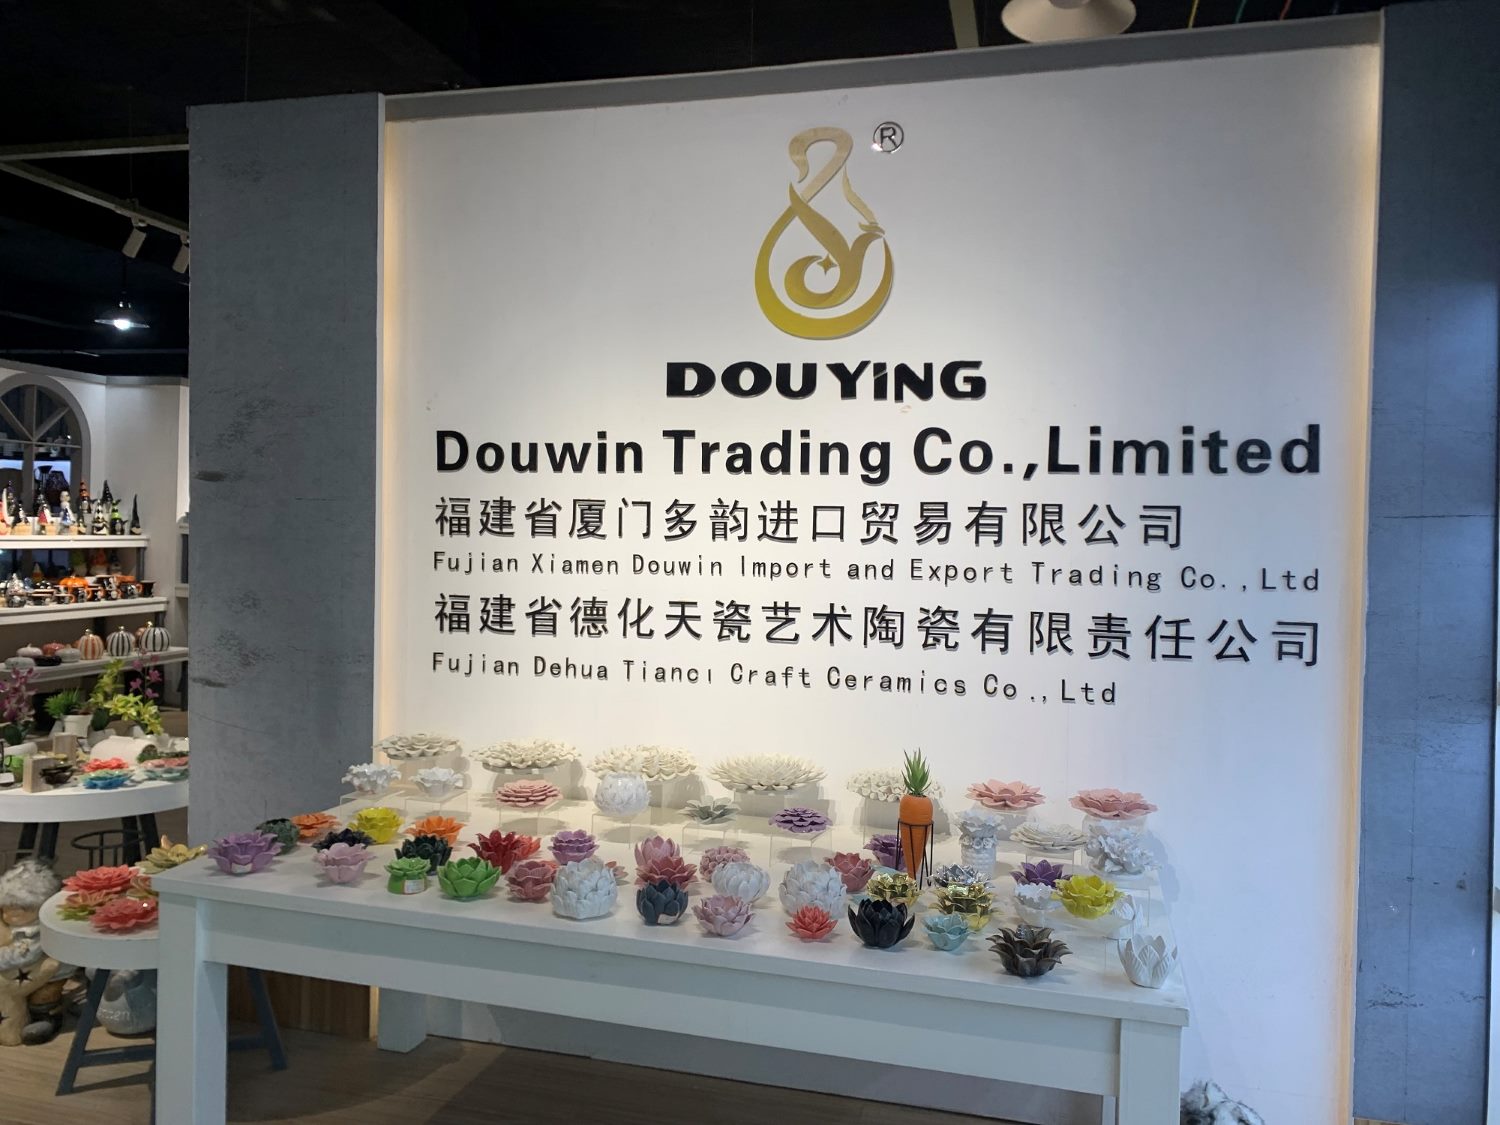 Xiamen Douwin Import and Export Trading Co., Ltd.